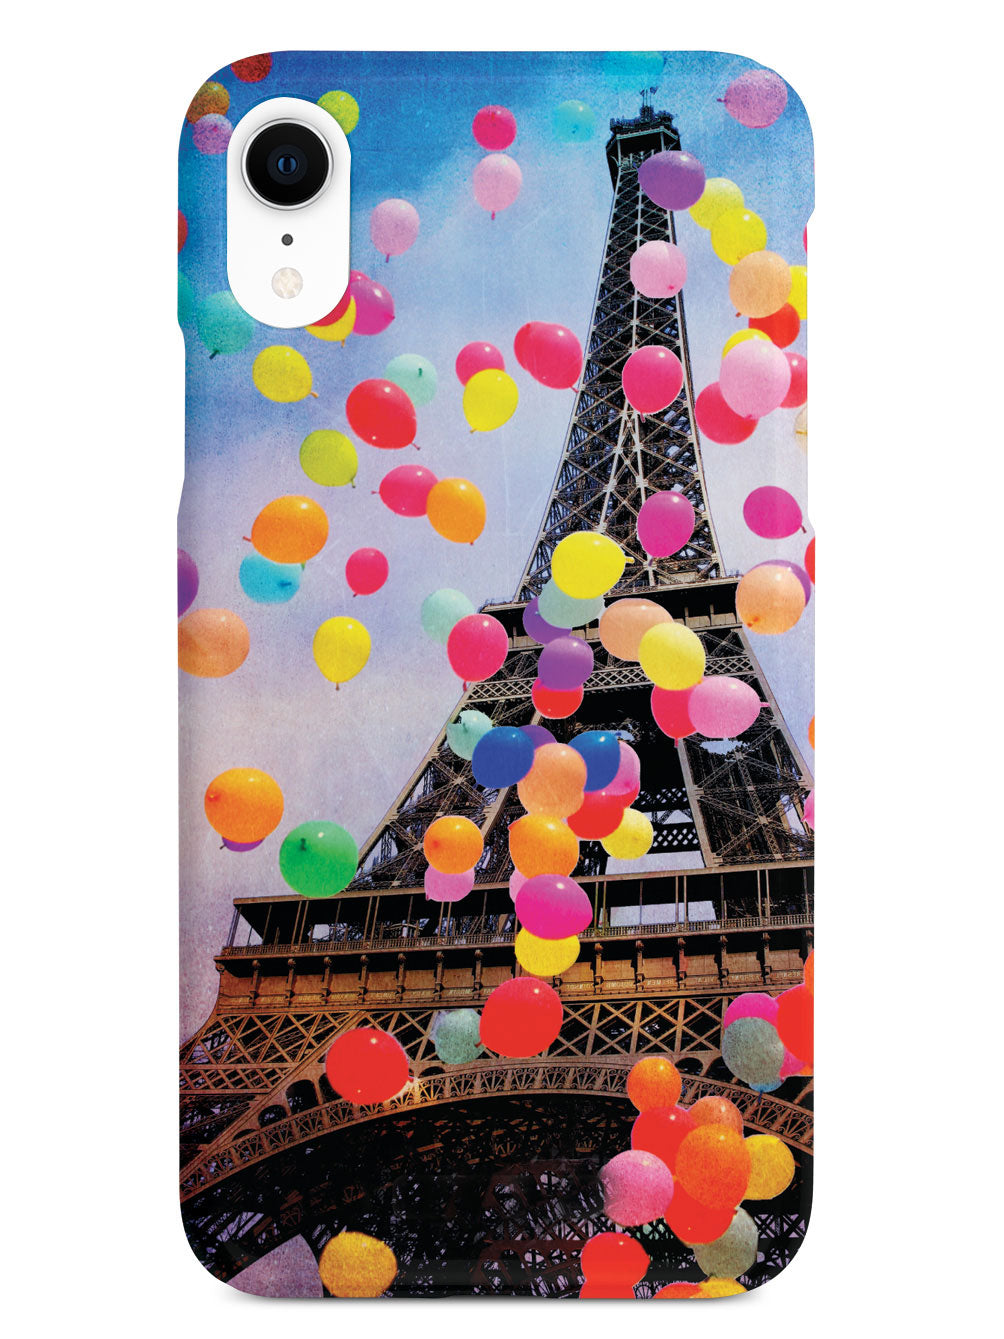 Balloons In Paris Case